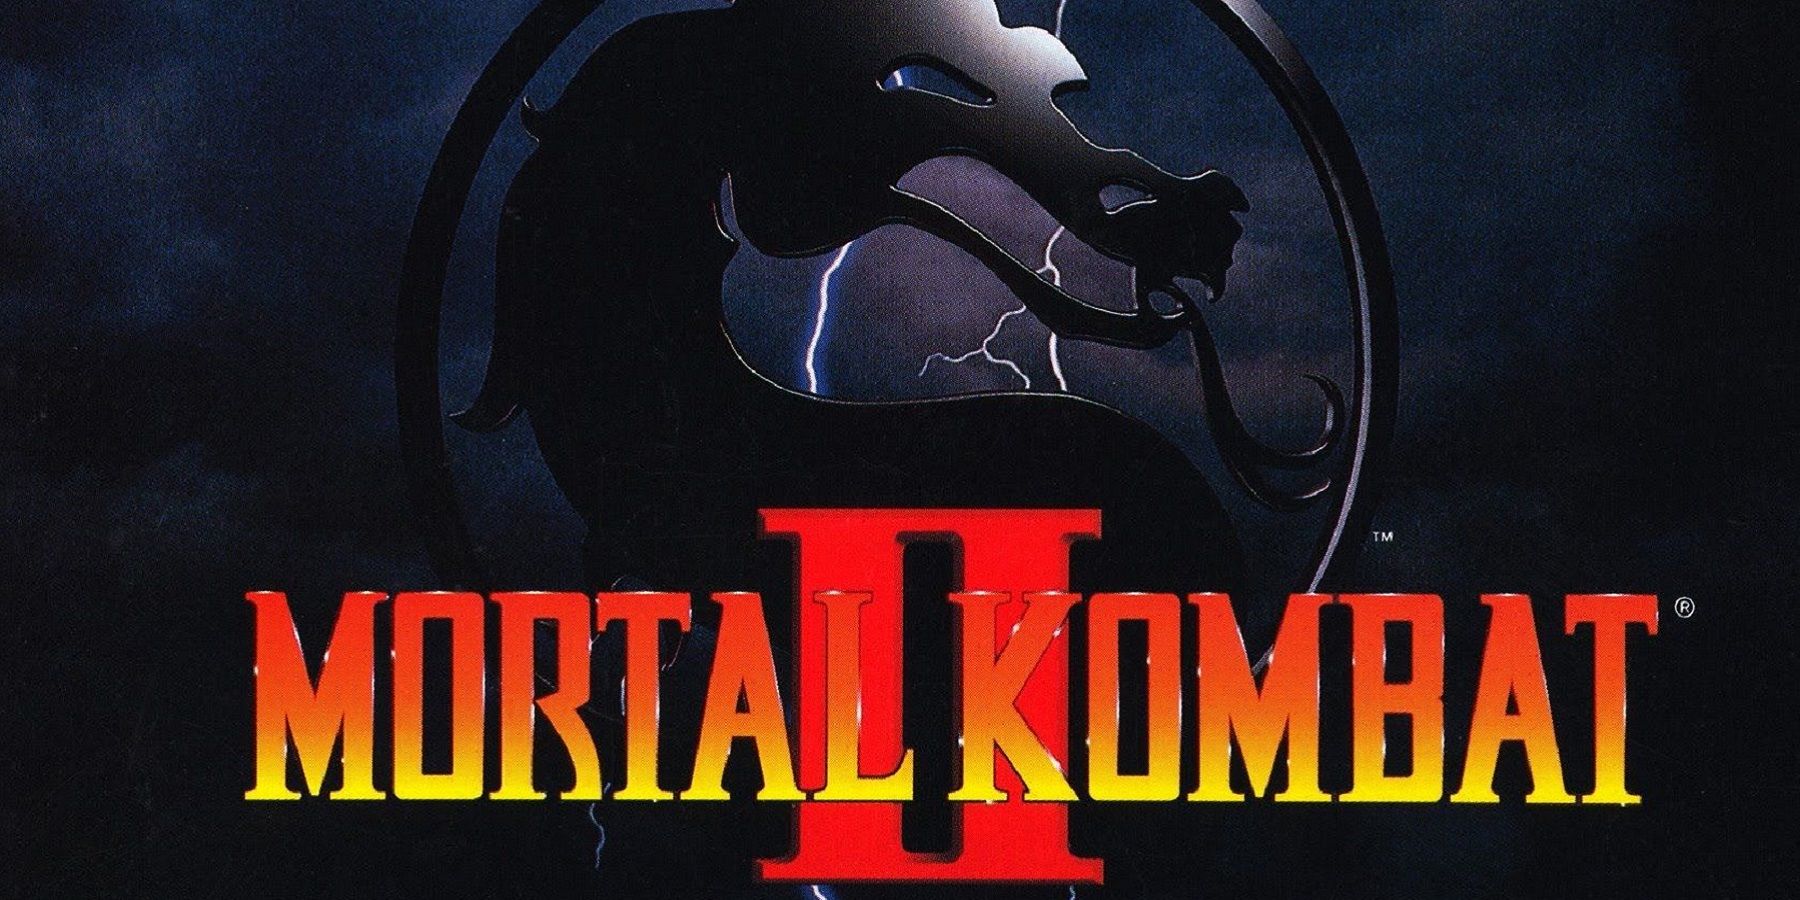 Mortalk Kombat 2 logo on a dark and stormy background.